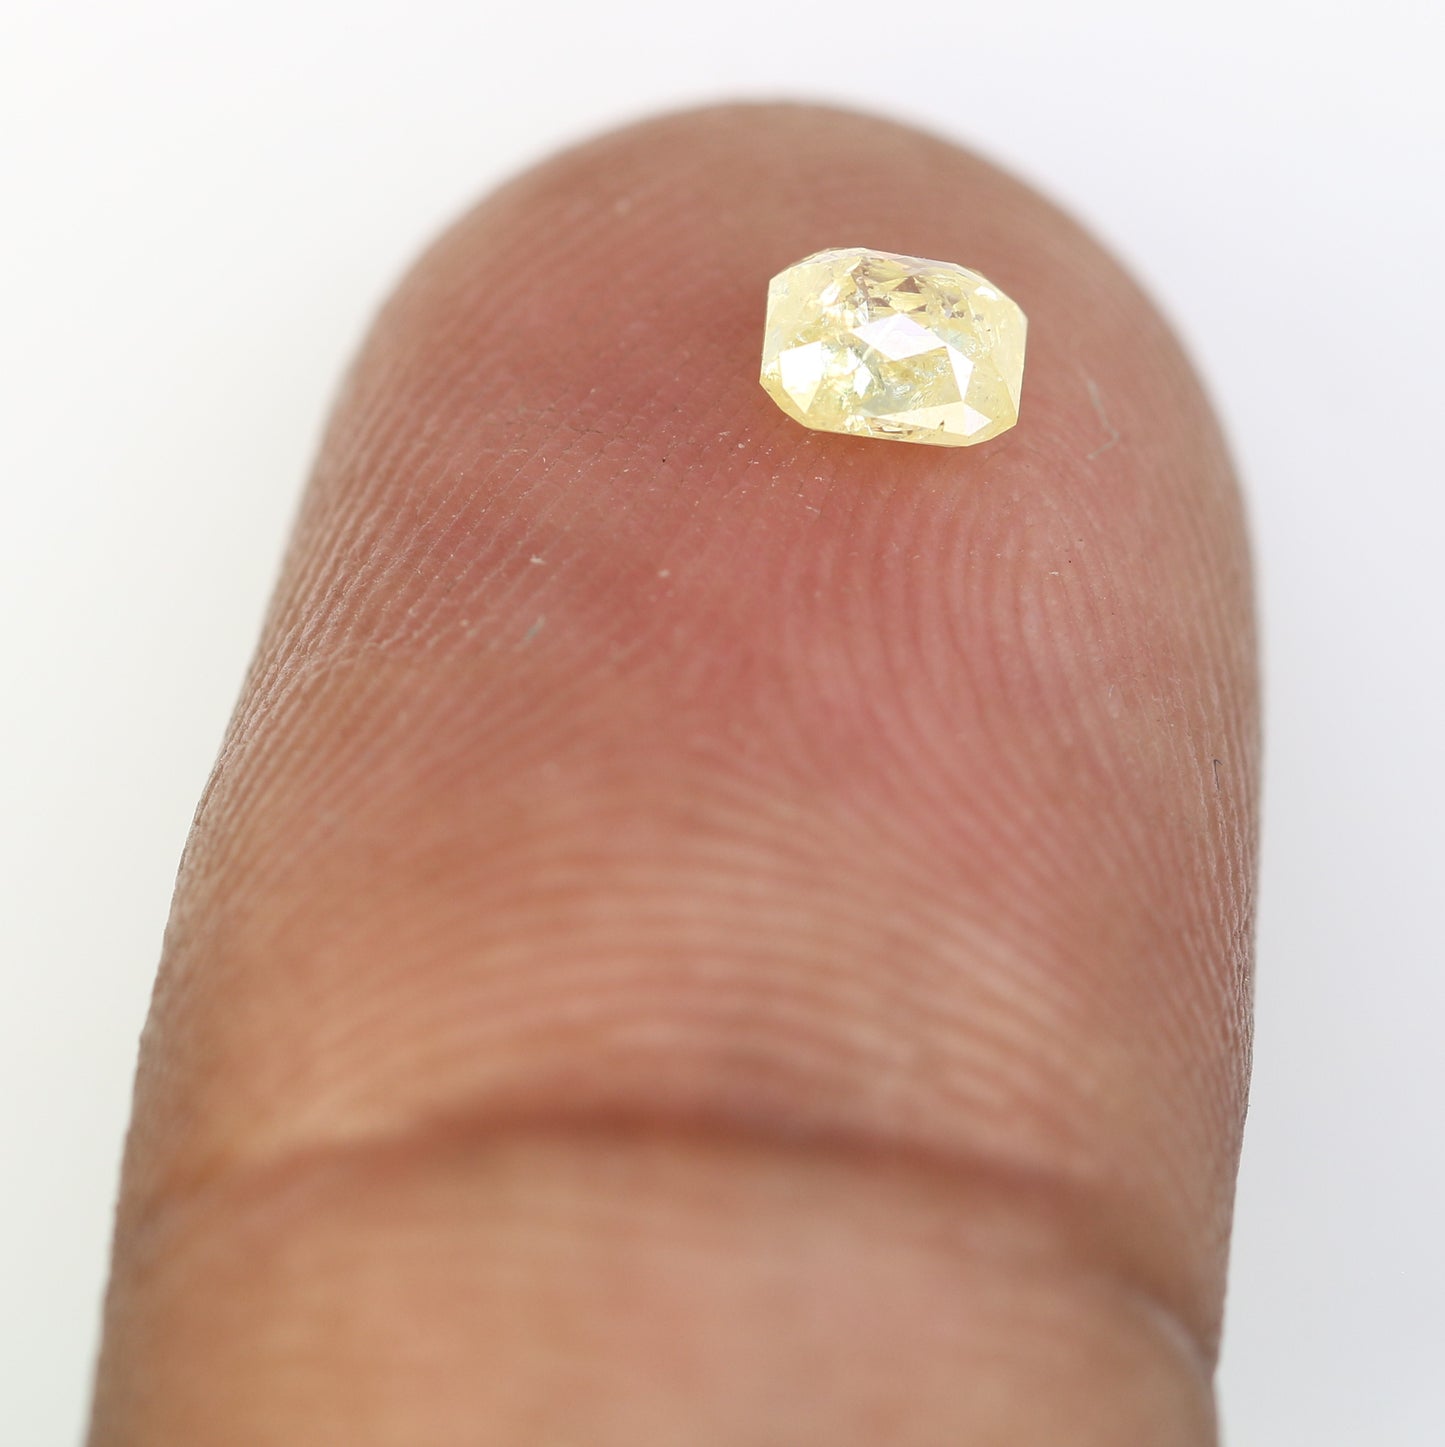 0.44 CT Light Yellow Loose Asscher Shape Diamond For Engagement Ring